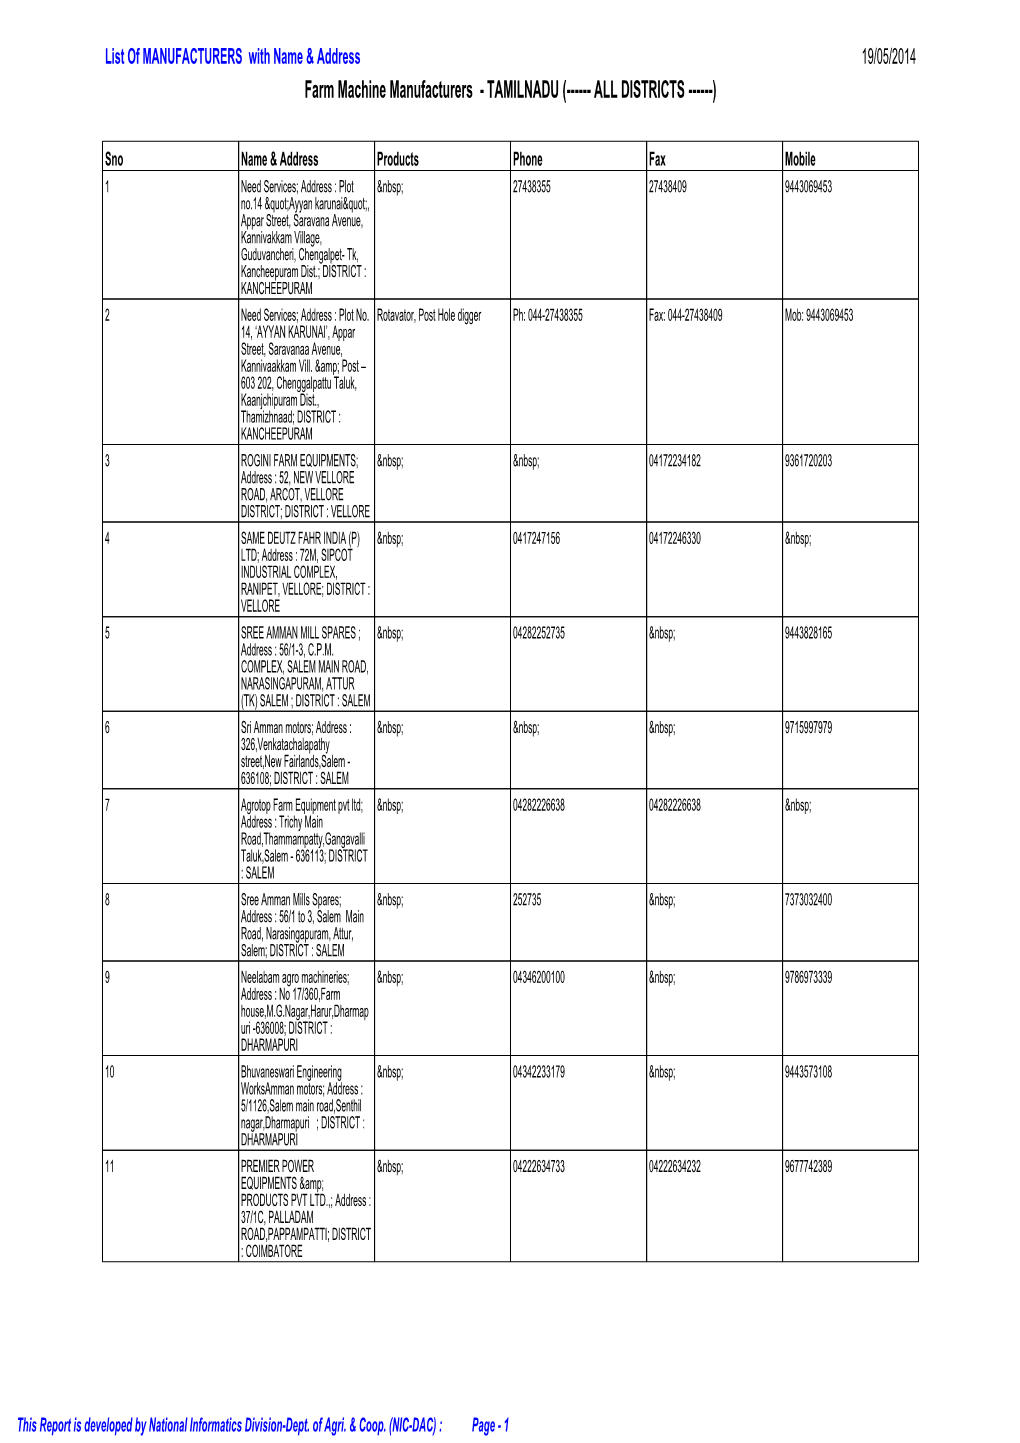 List of Manufactures in Tamil Nadu.Pdf